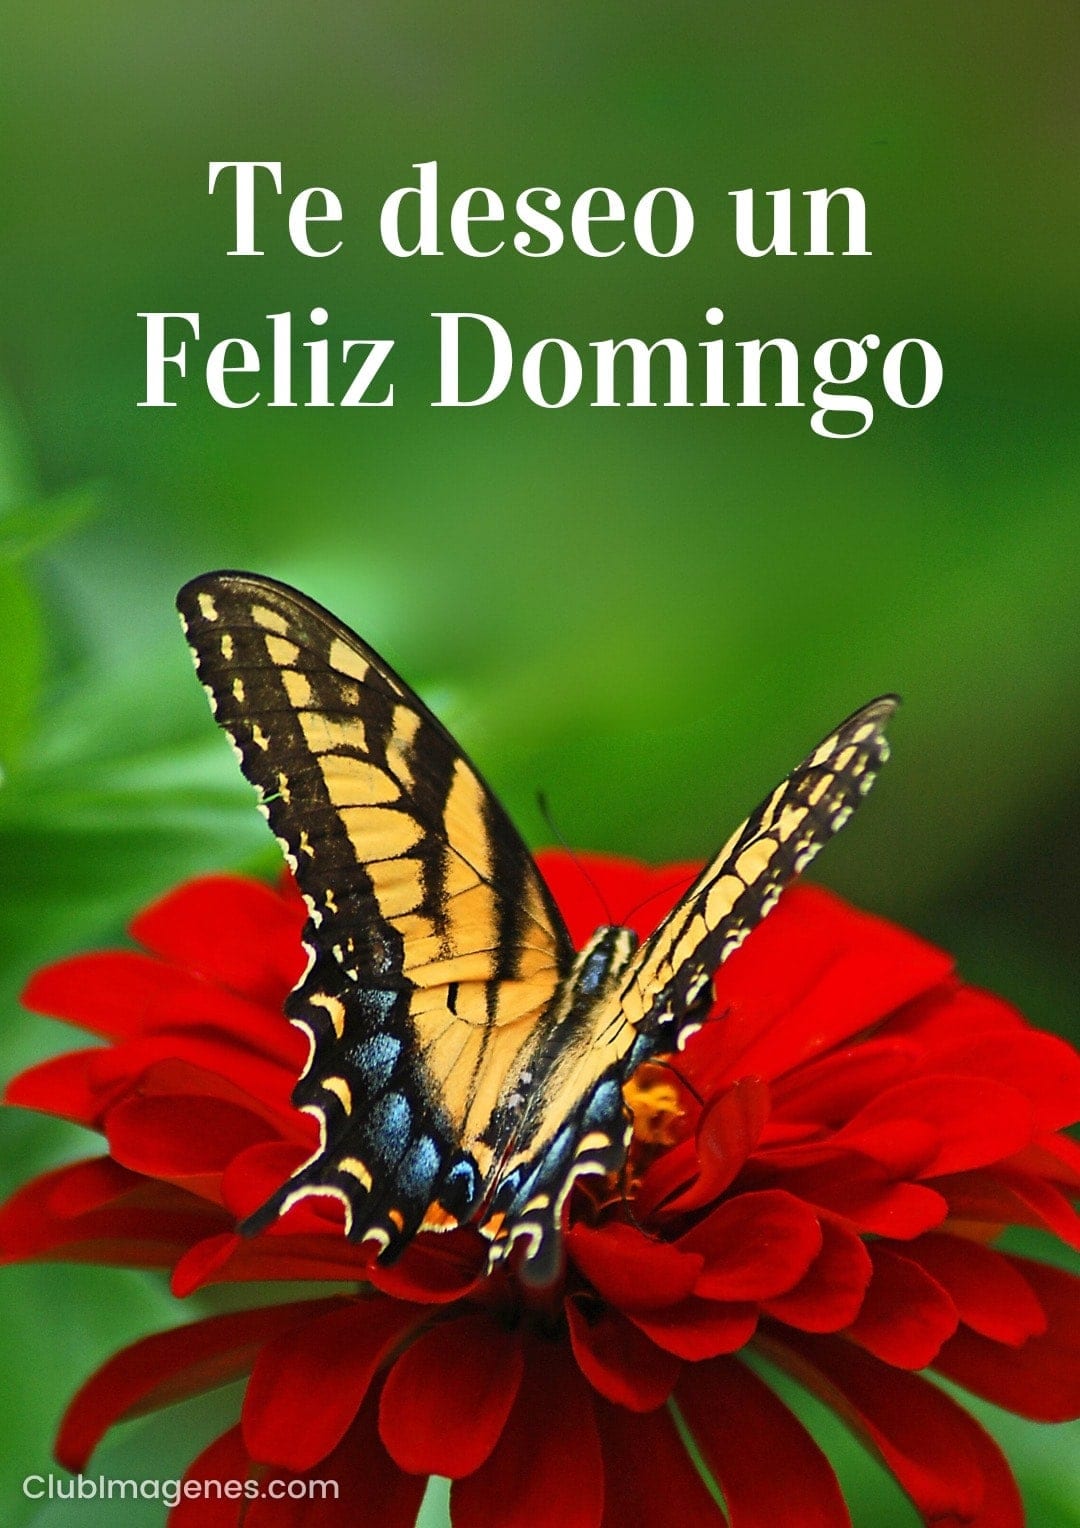 Mariposa posa sobre flor roja con texto deseando un Feliz Domingo